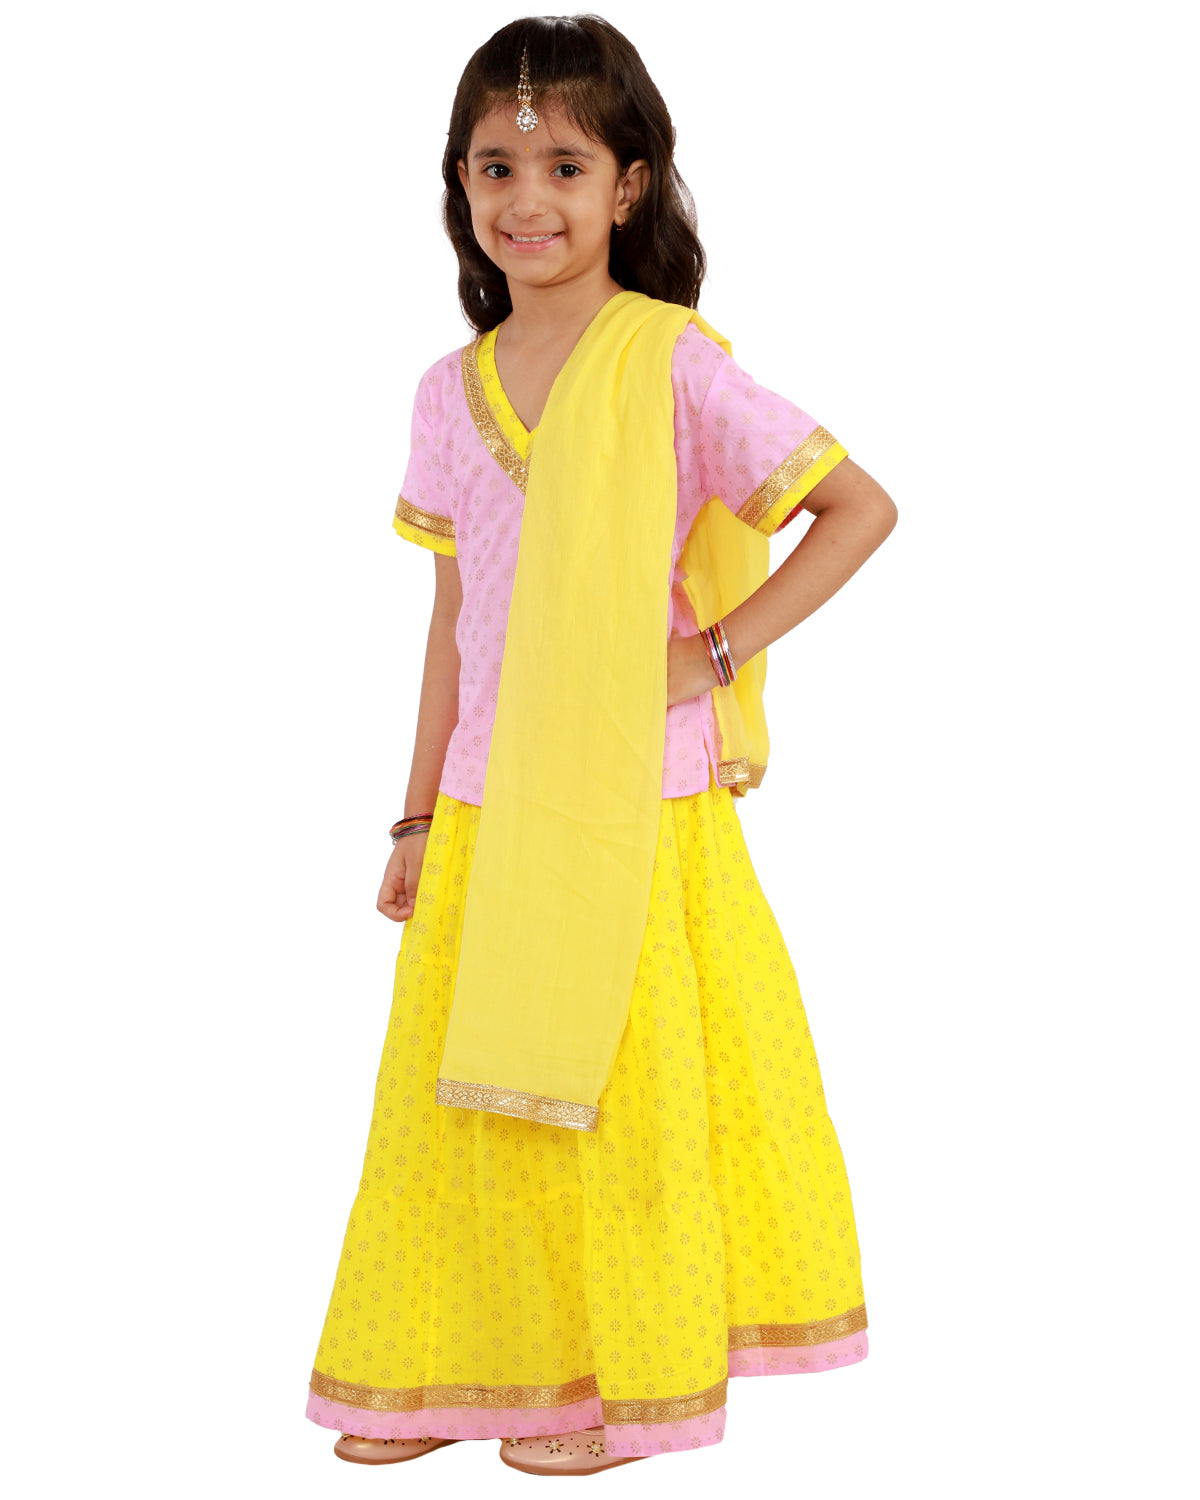 Rajasthani Jaipuri Lehenga Bandhej Choli Gota Work Green Style Contras  Dress | eBay